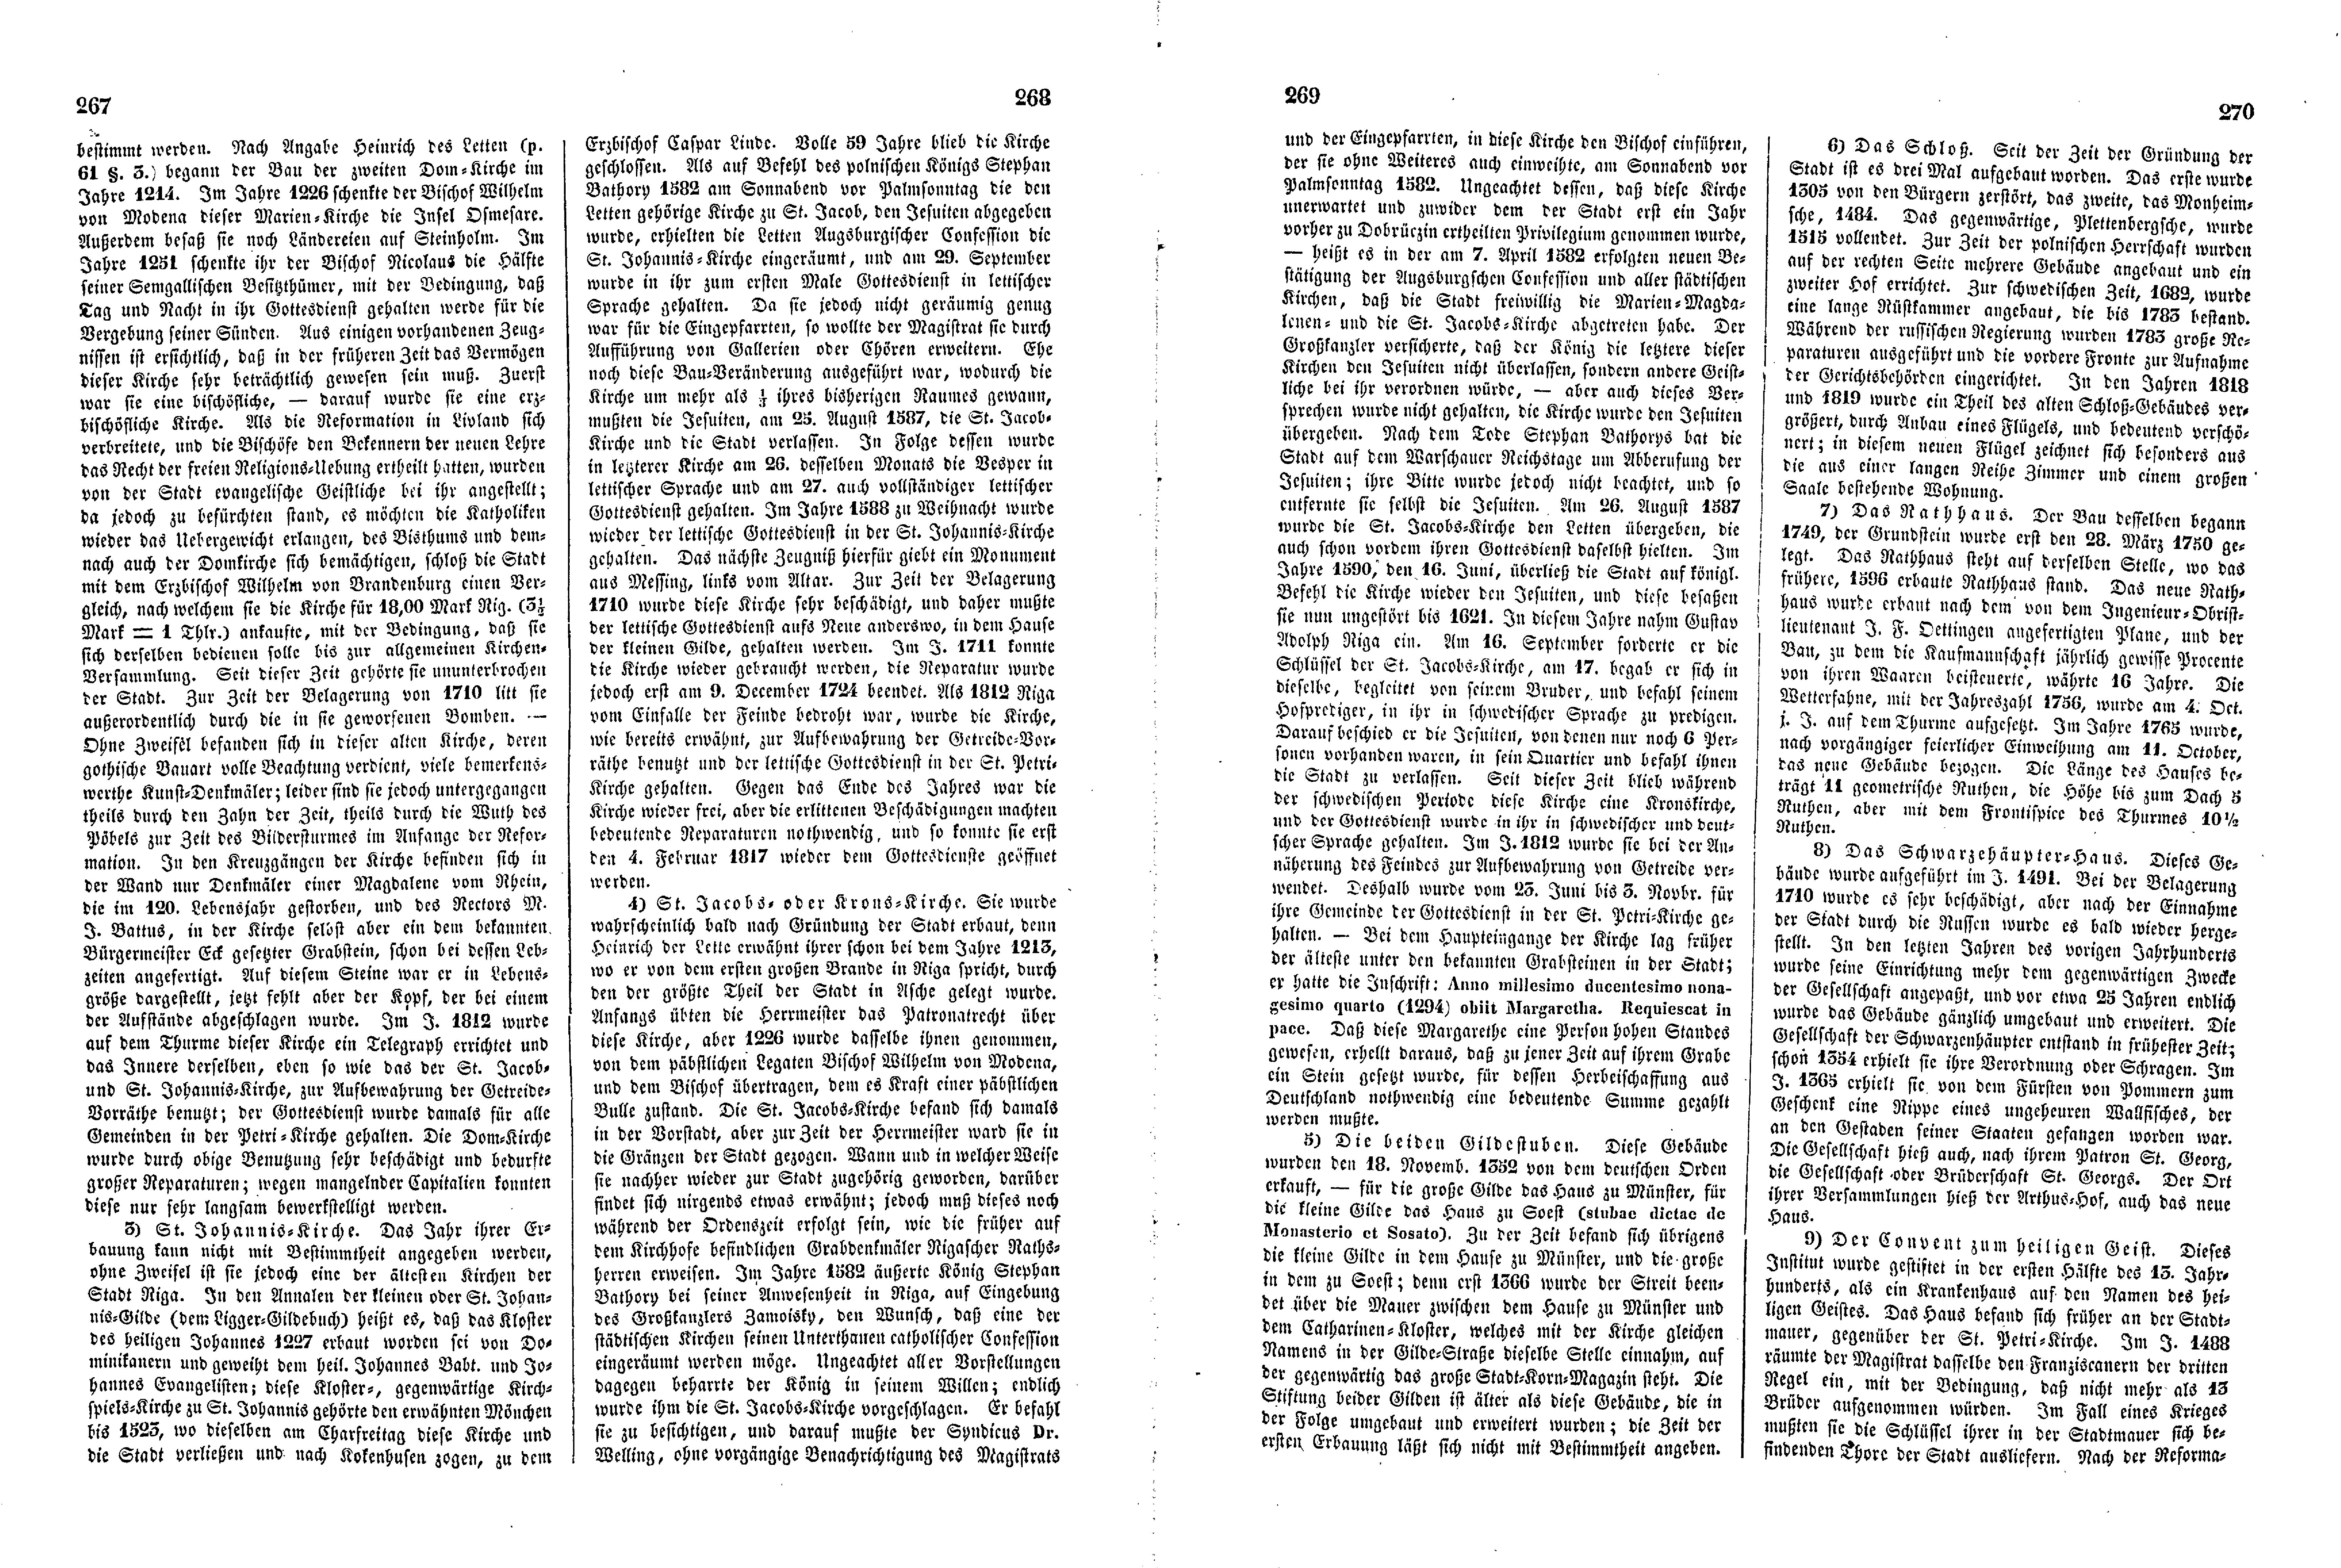 Das Inland [12] (1847) | 72. (267-270) Main body of text